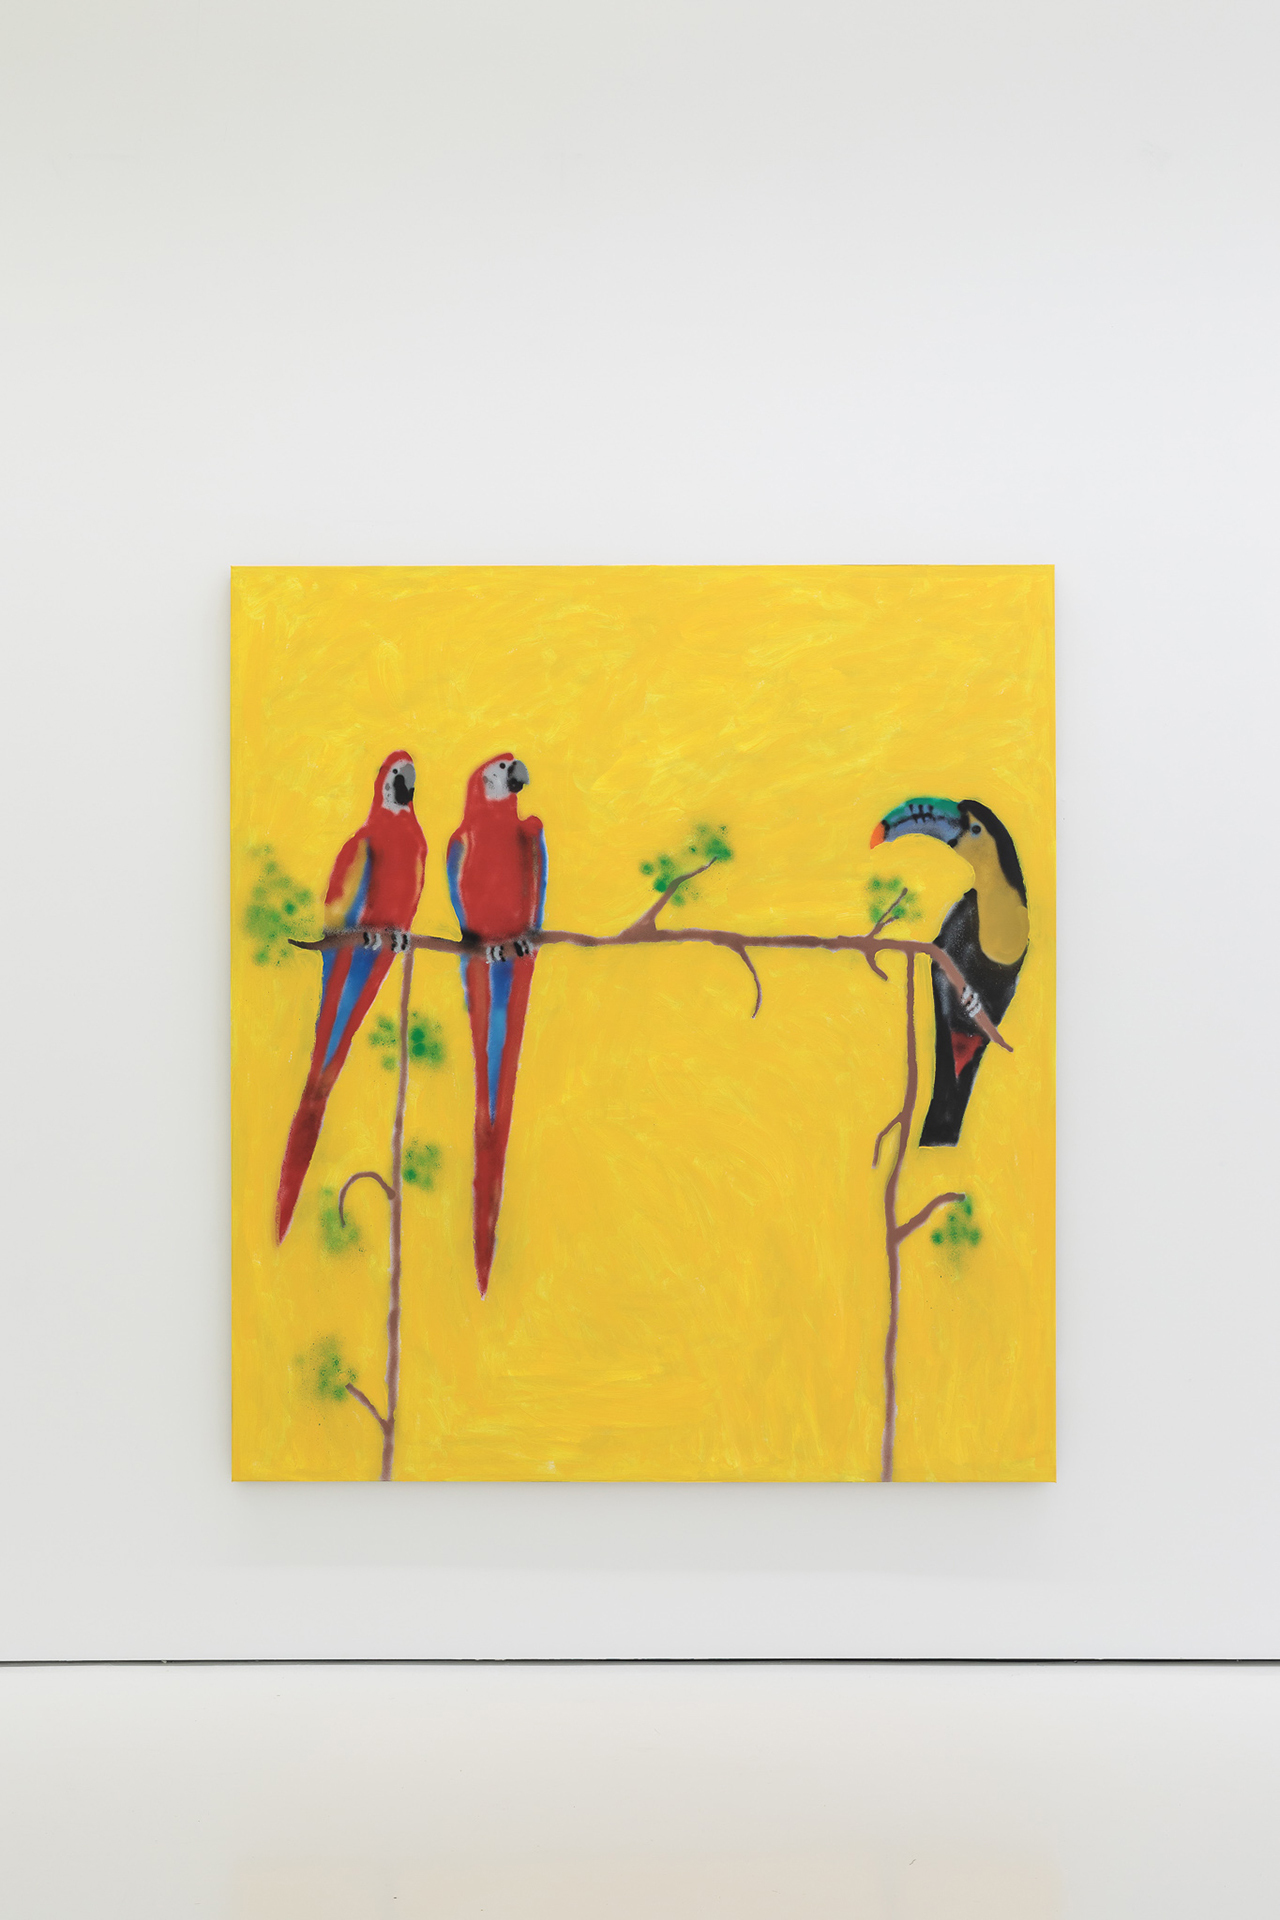 Ricardo Passaporte, Pássaros, 2021, Acrylic and spray paint on canvas, 200 x 180 cm